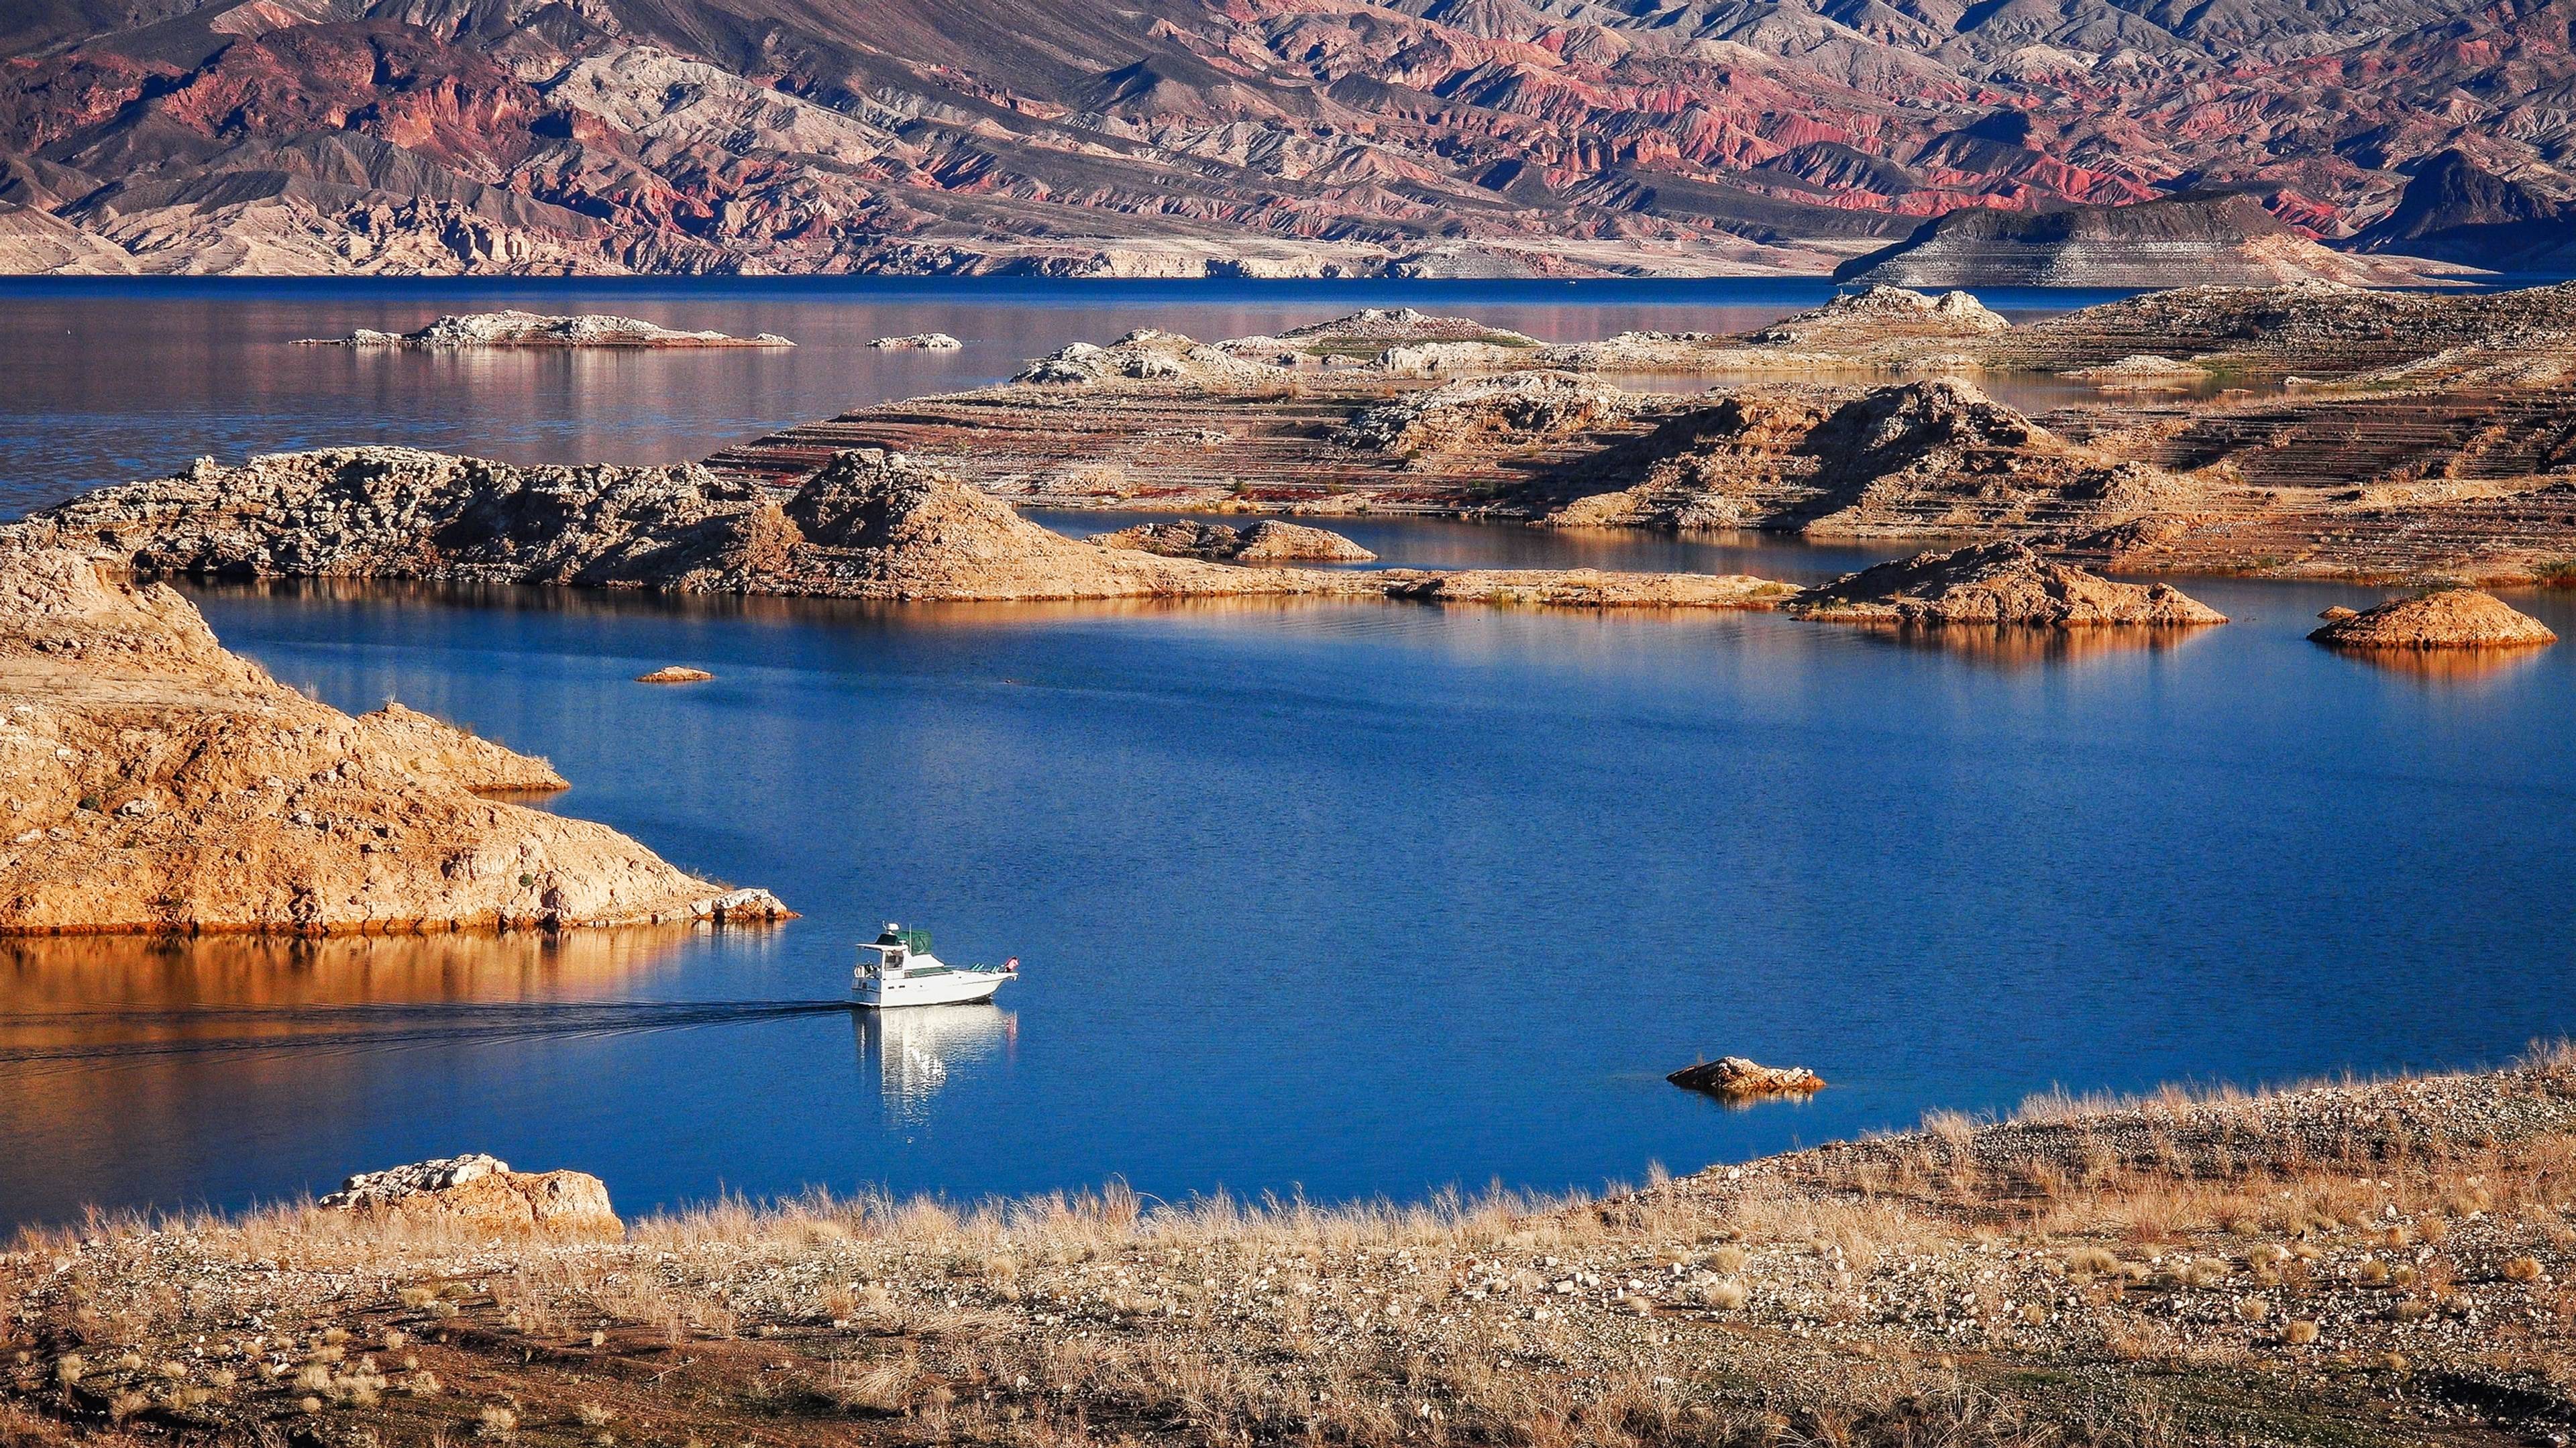 Lake Mead - Ausblick auf den See